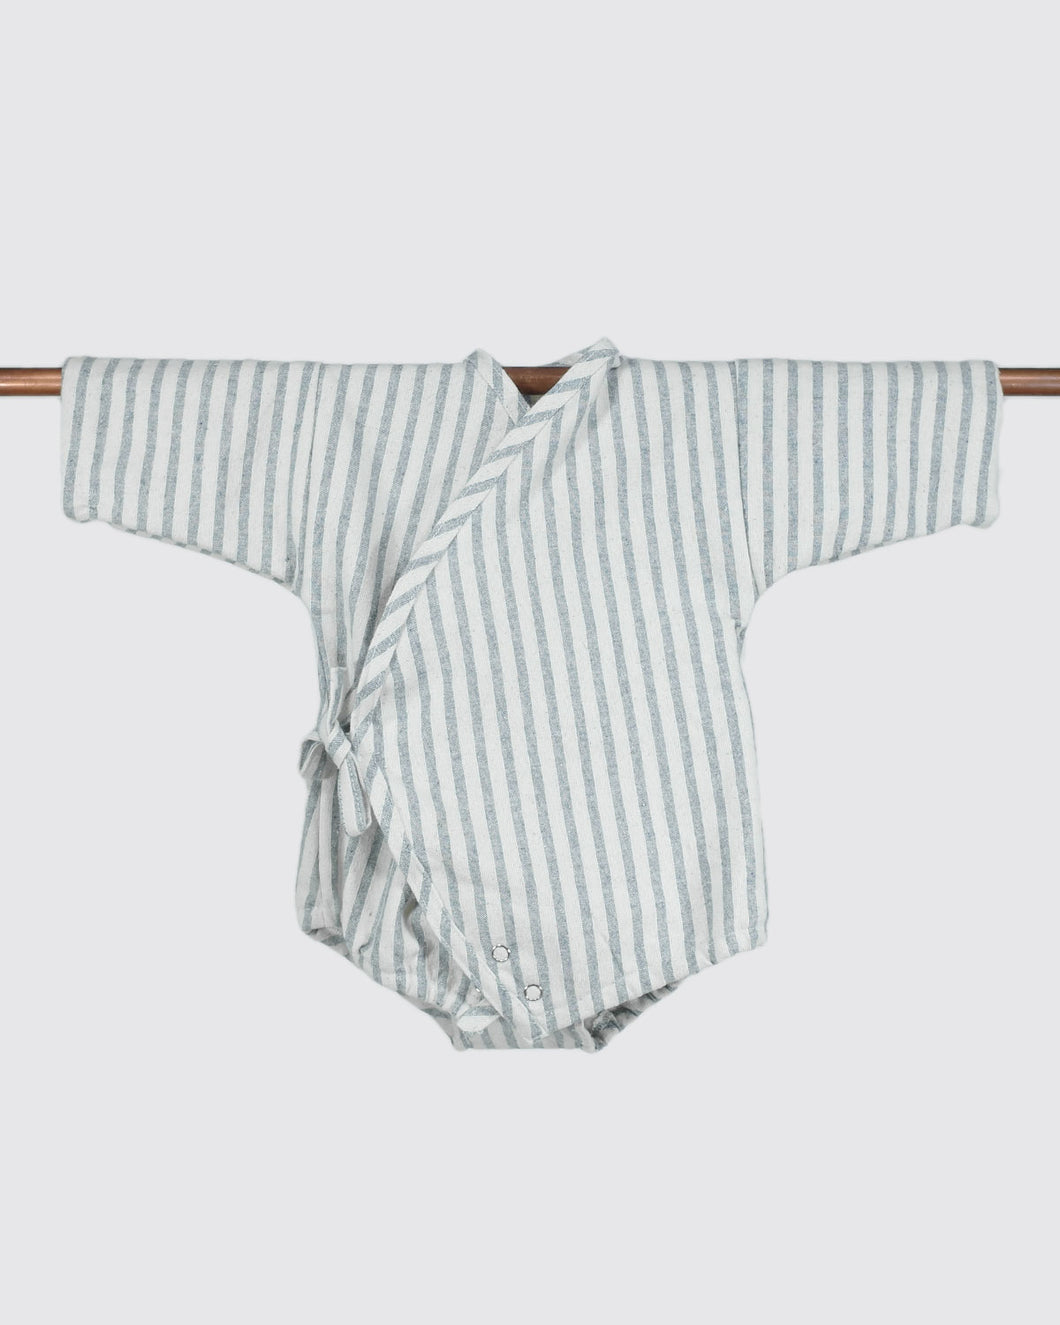 Baby kimono onesie La Superior stripes